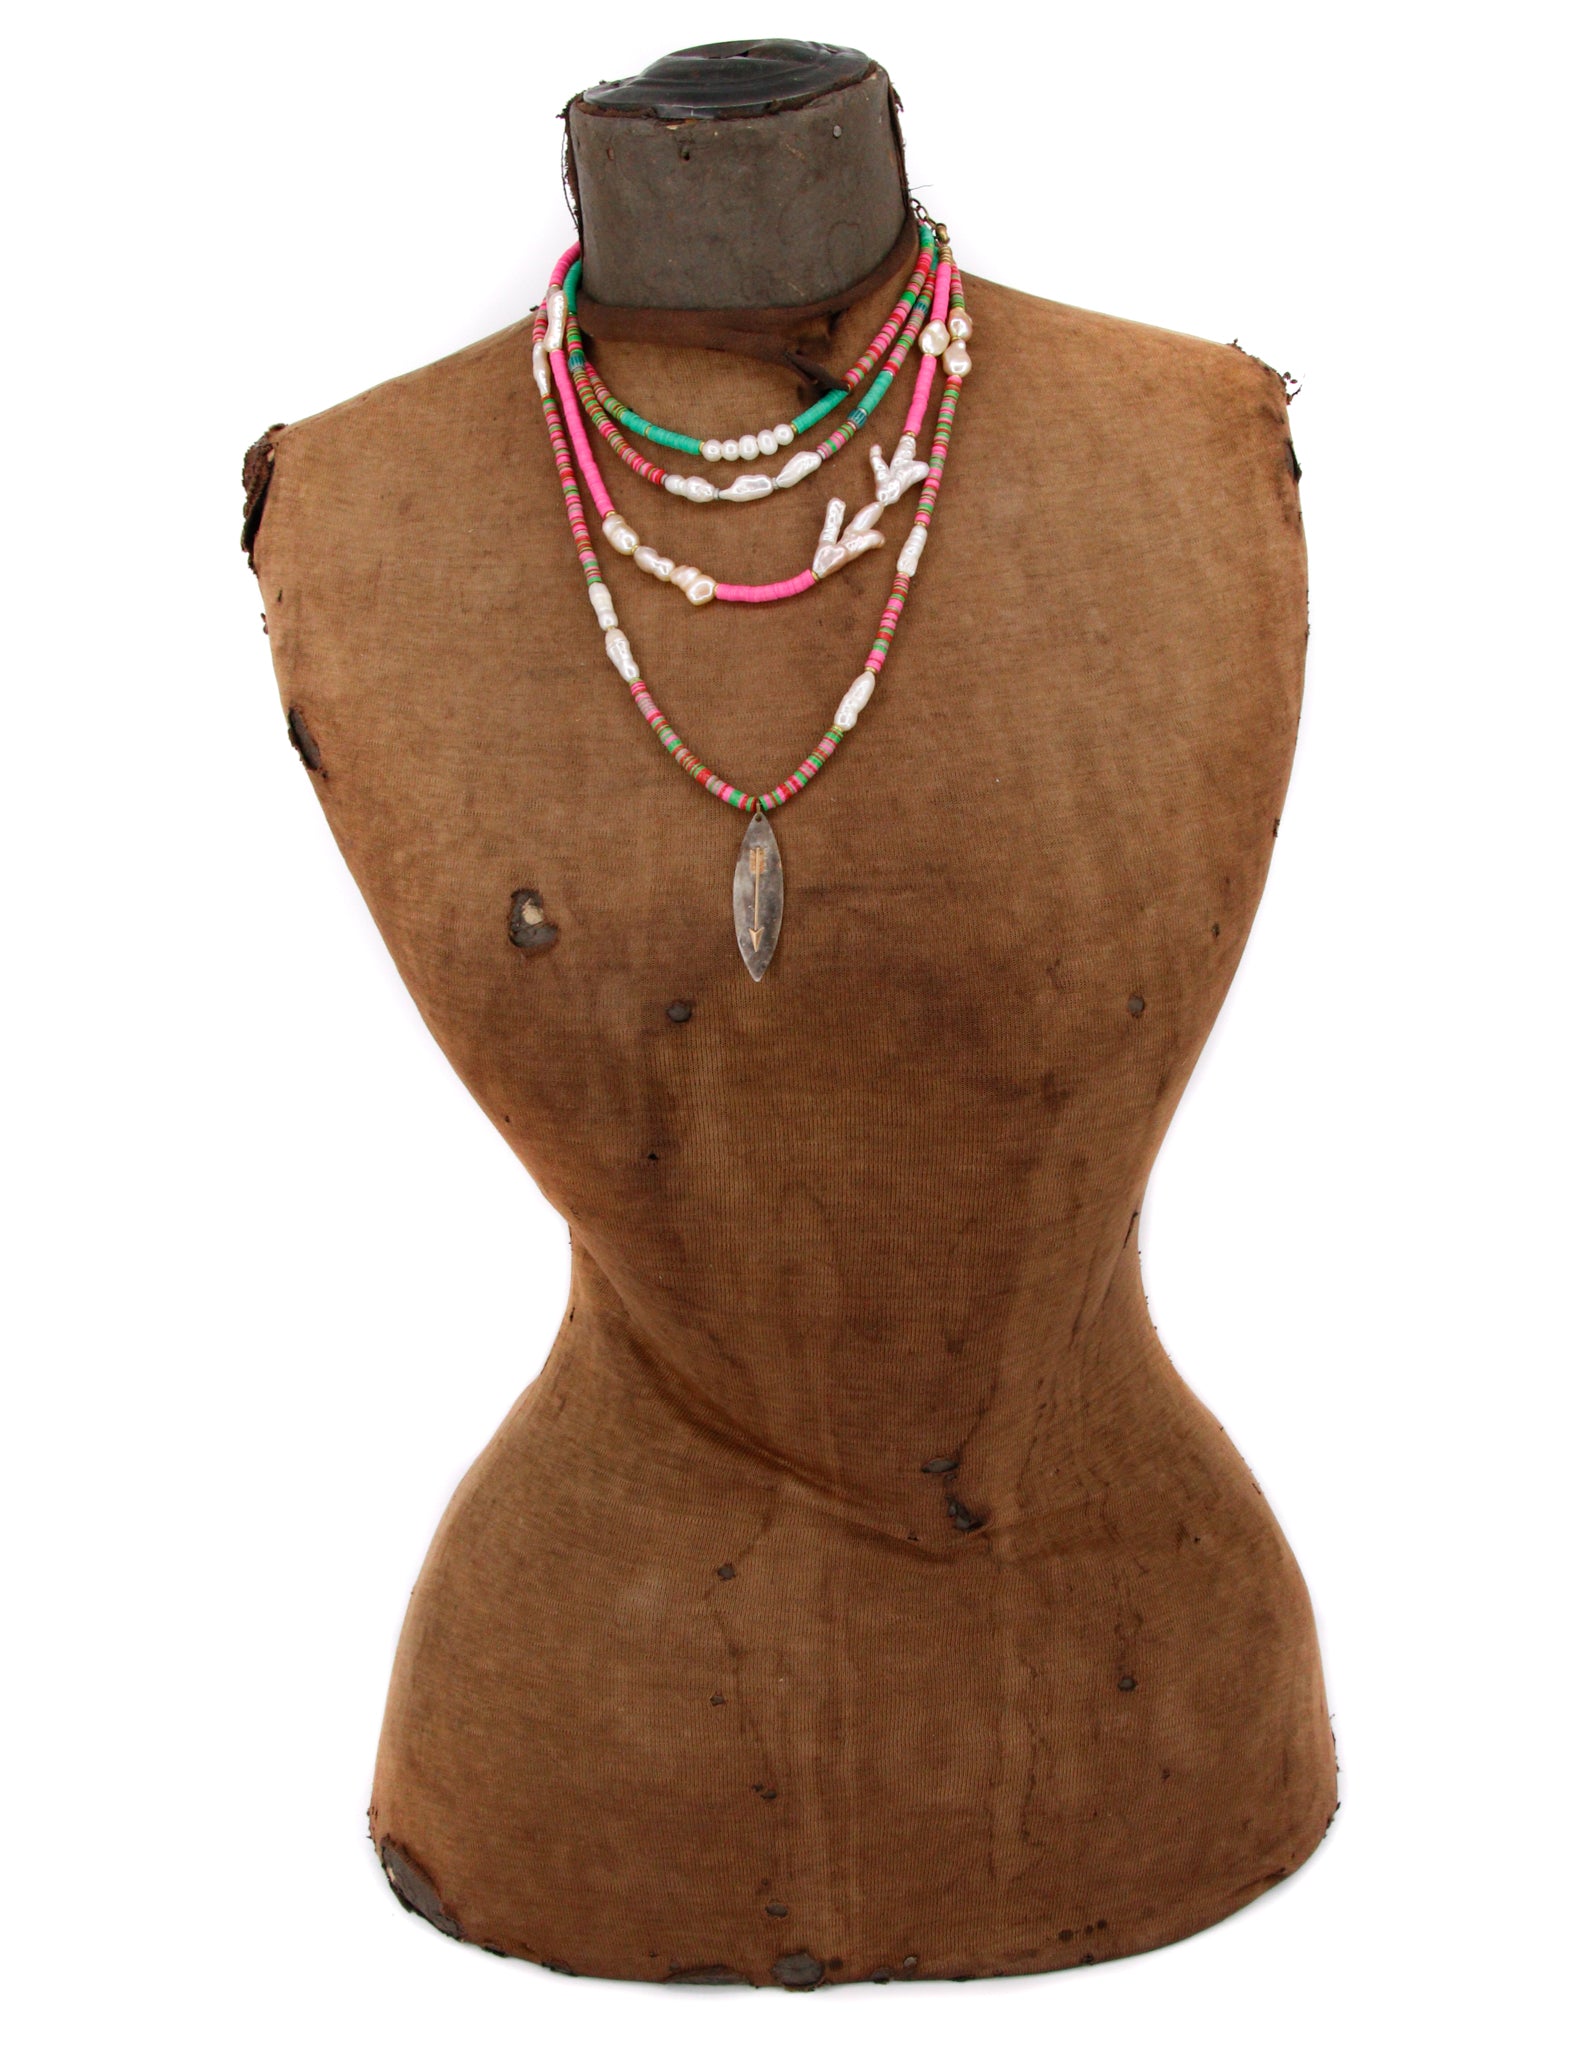 African vinyl necklace